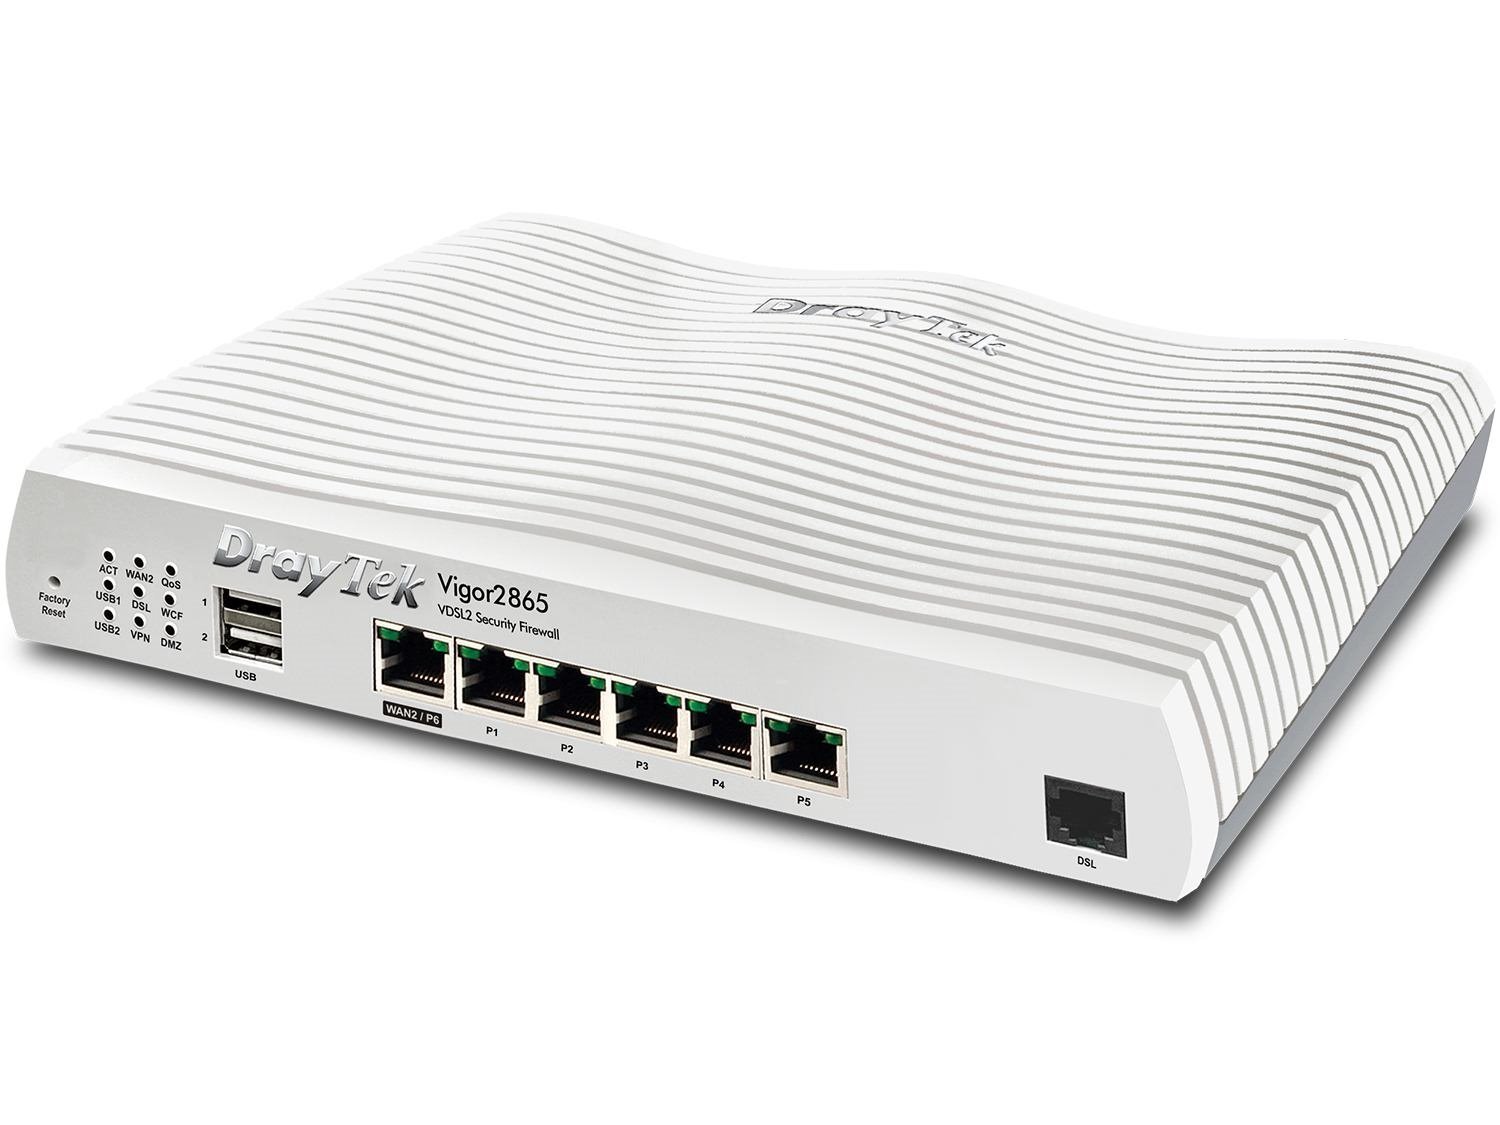 Draytek Vigor2865ax Wireless Router Gigabit Ethernet Dual-Band [2.4 GHz / 5 GHz] White (DrayTek Firewall VPN Router Ax300 WiFi 6 - Vigor 2865Ax)